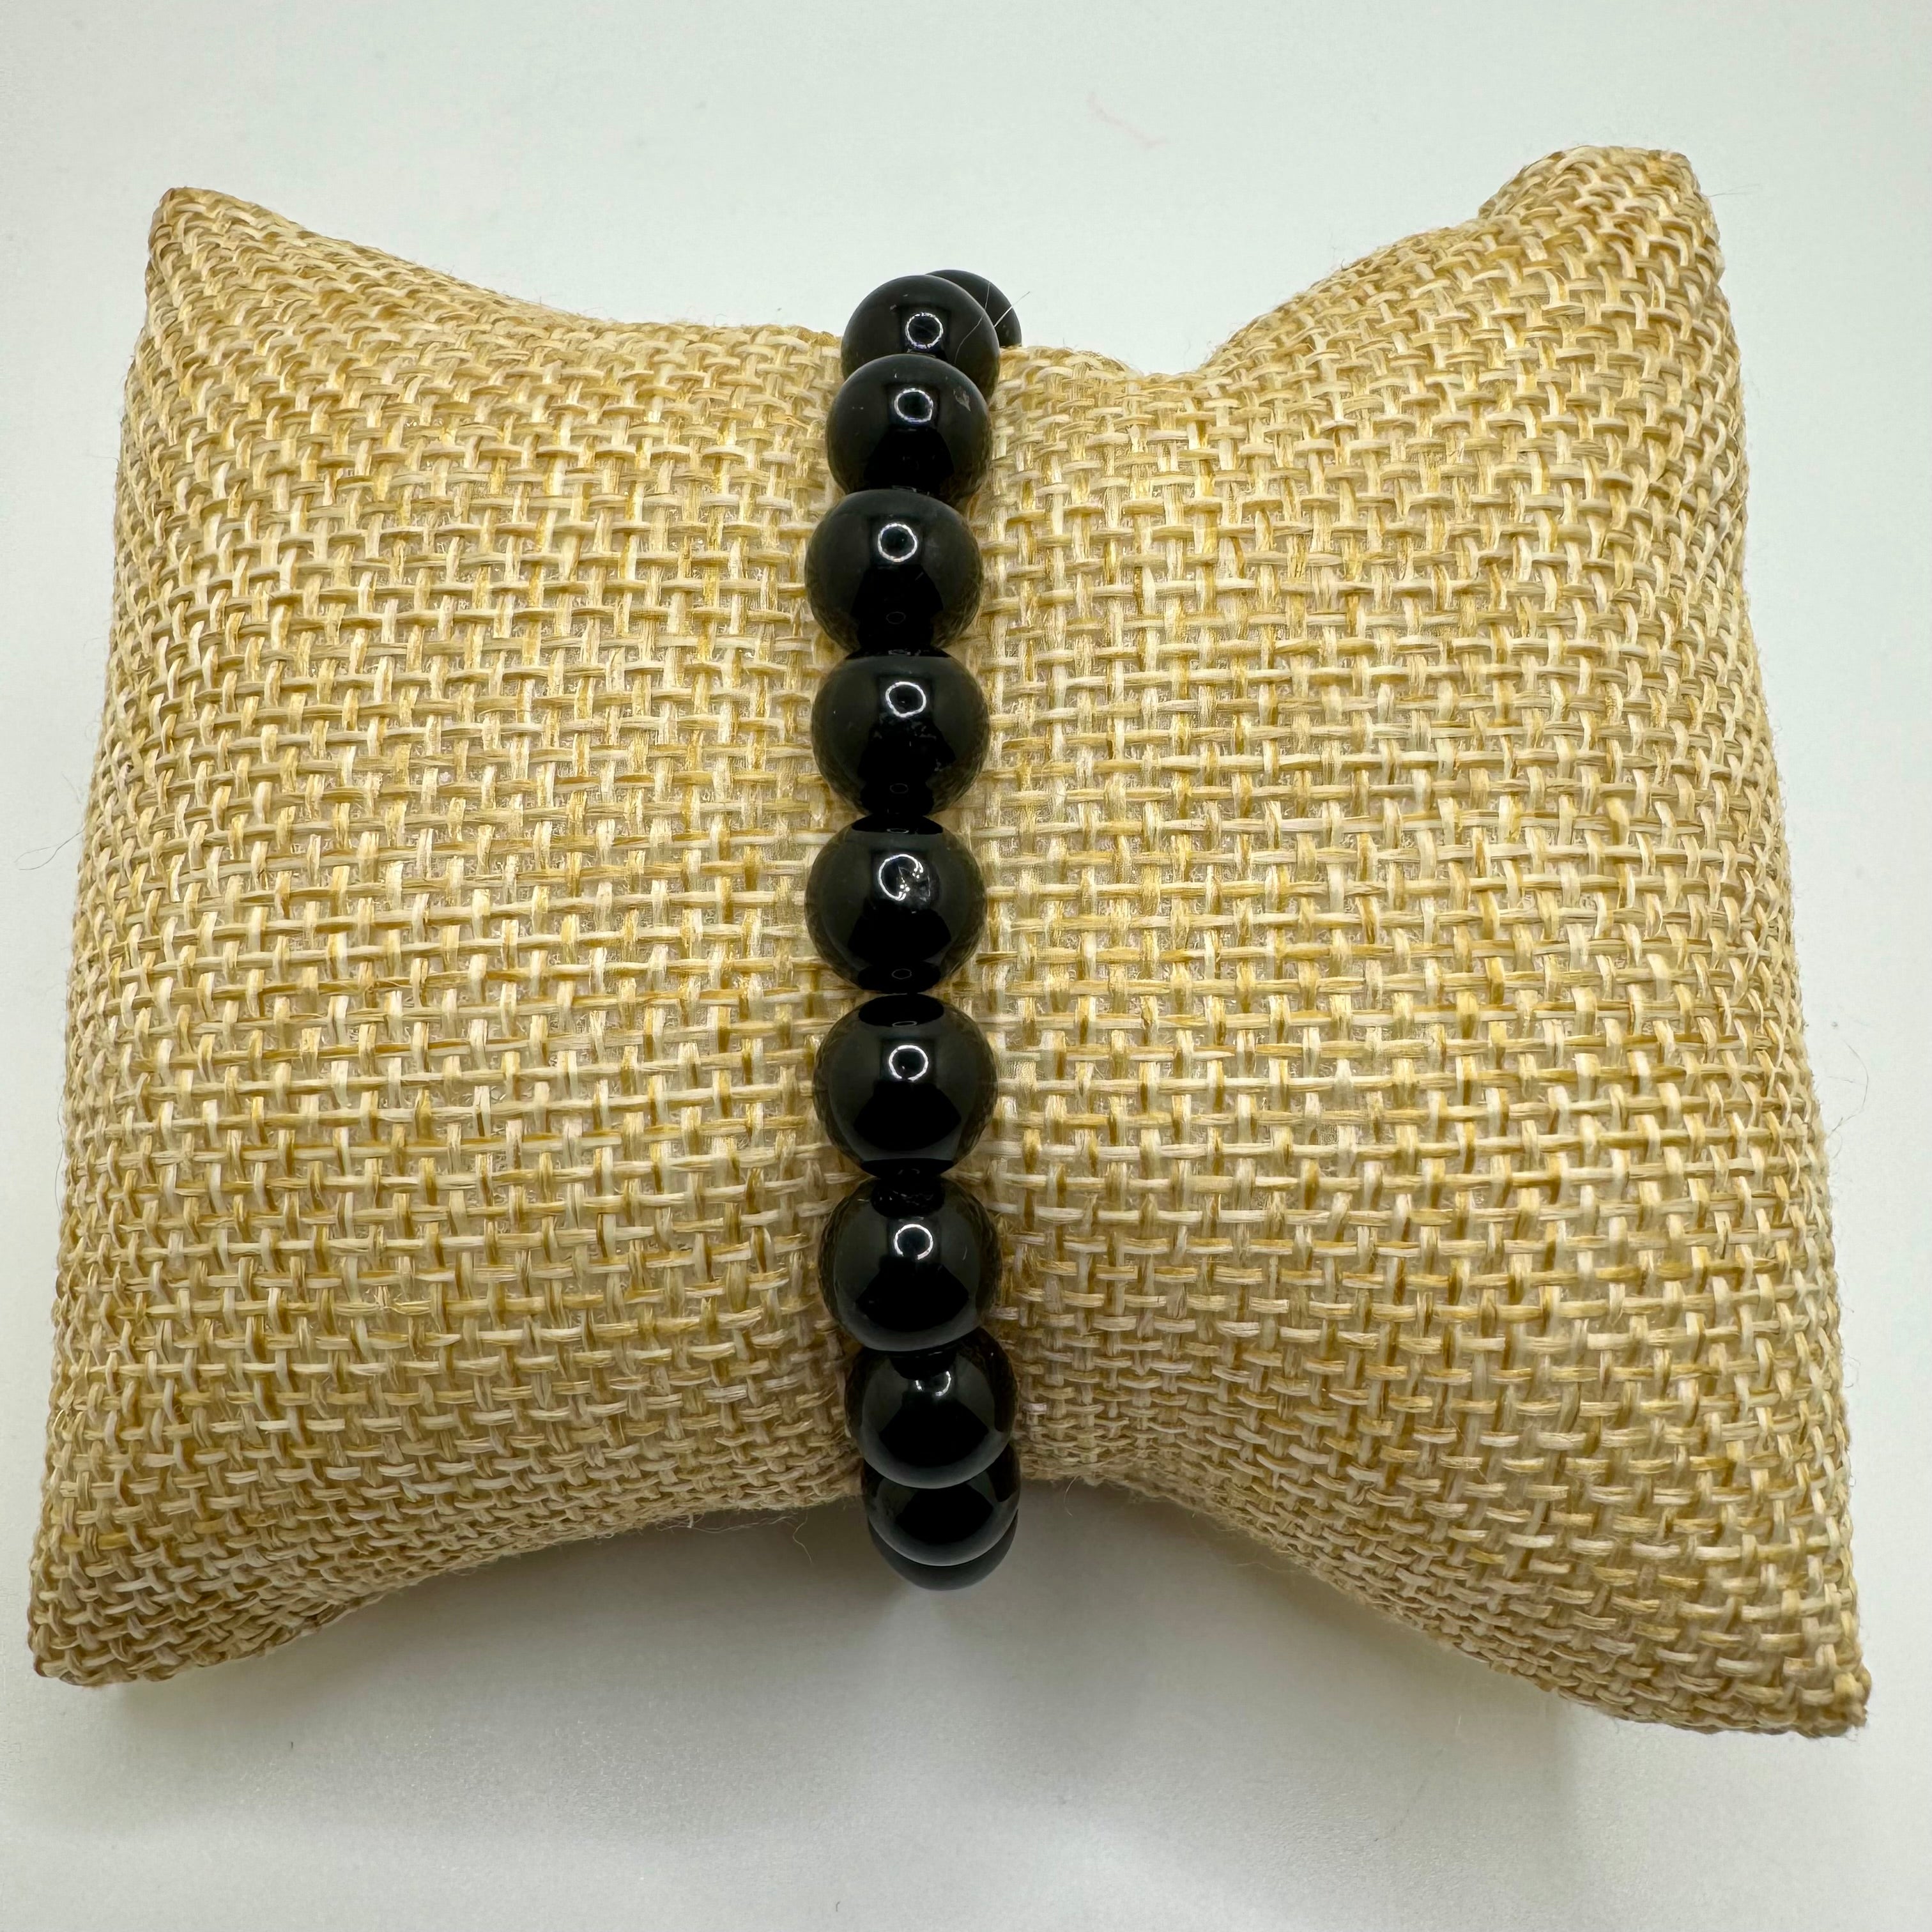 Black Obsidian Stretch Bracelet 8mm beads